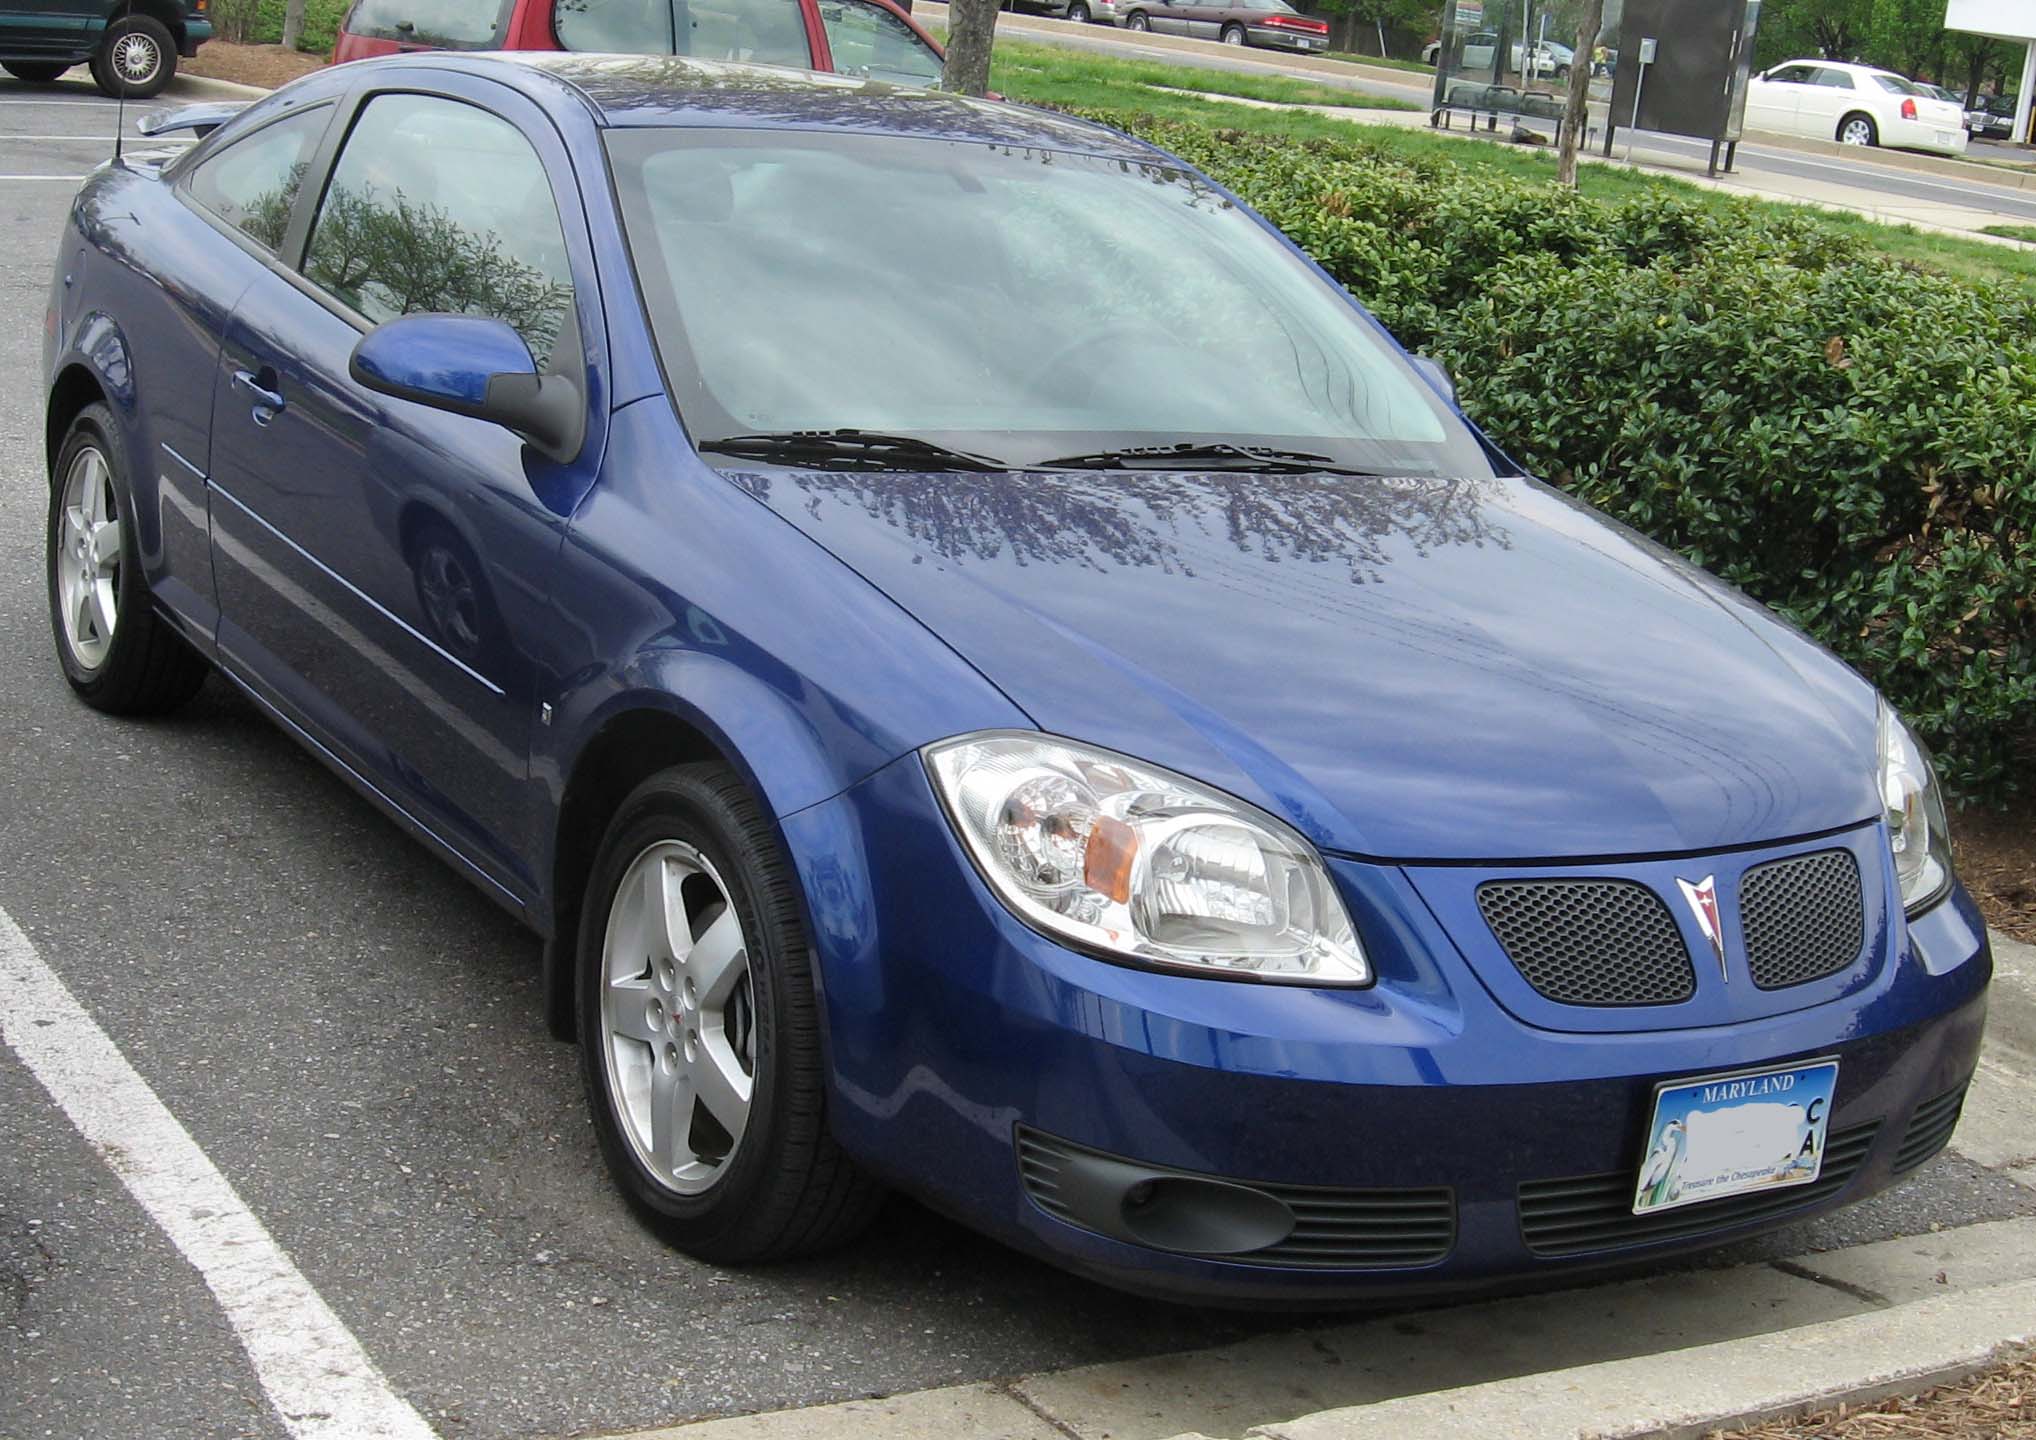 File:2007-Pontiac-G5-coupe.jpg